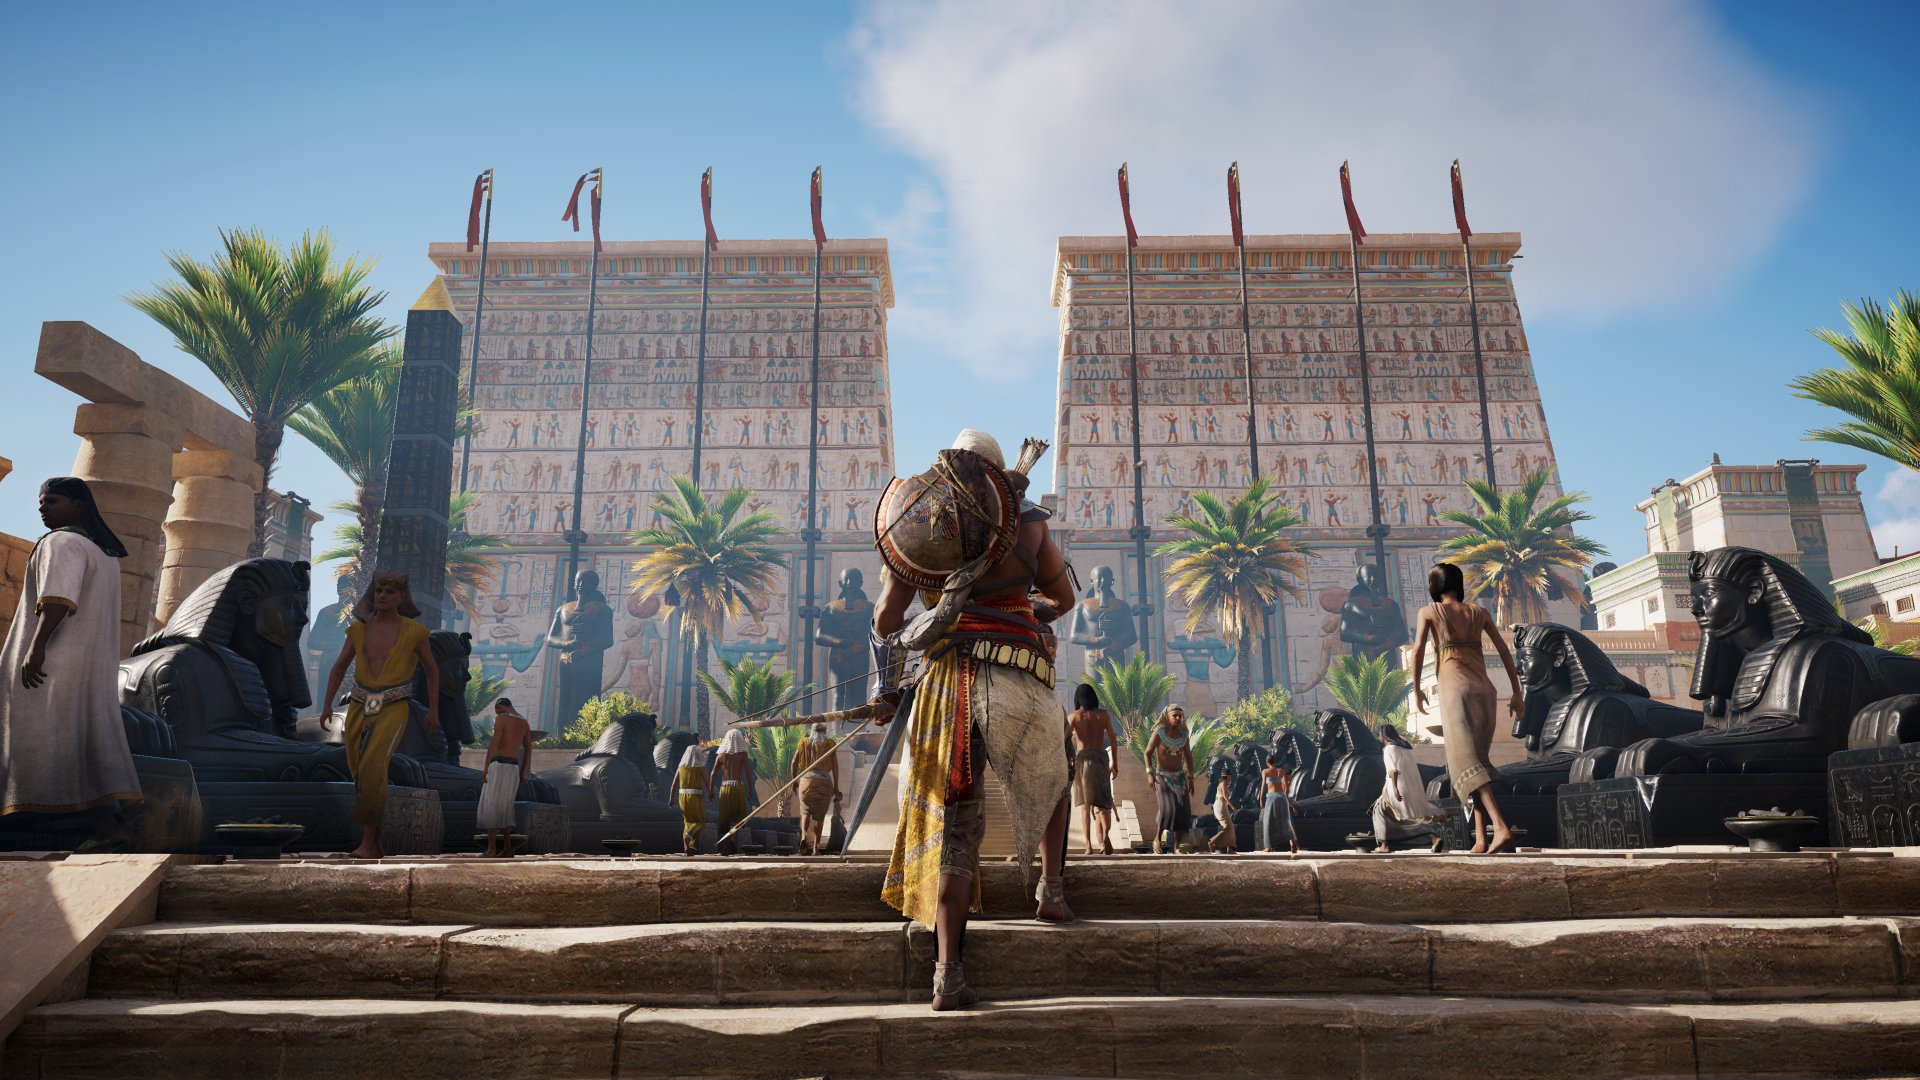 Assassin's Creed Origins' Free DLC And Season Pass Revealed - GameSpot